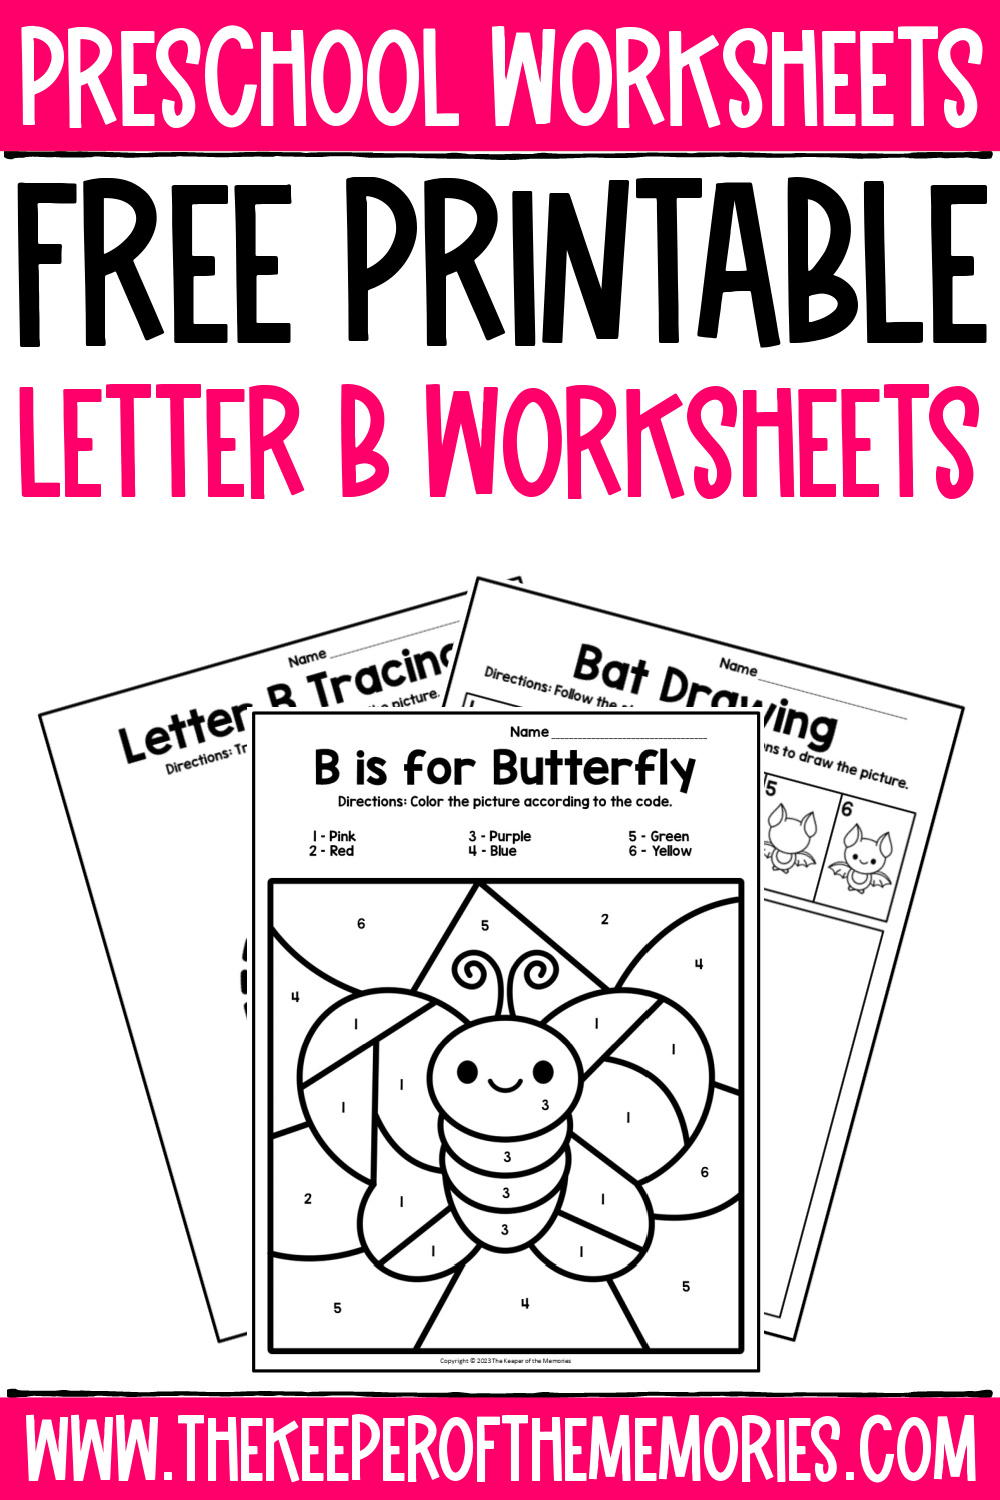 Free printable letter b worksheets